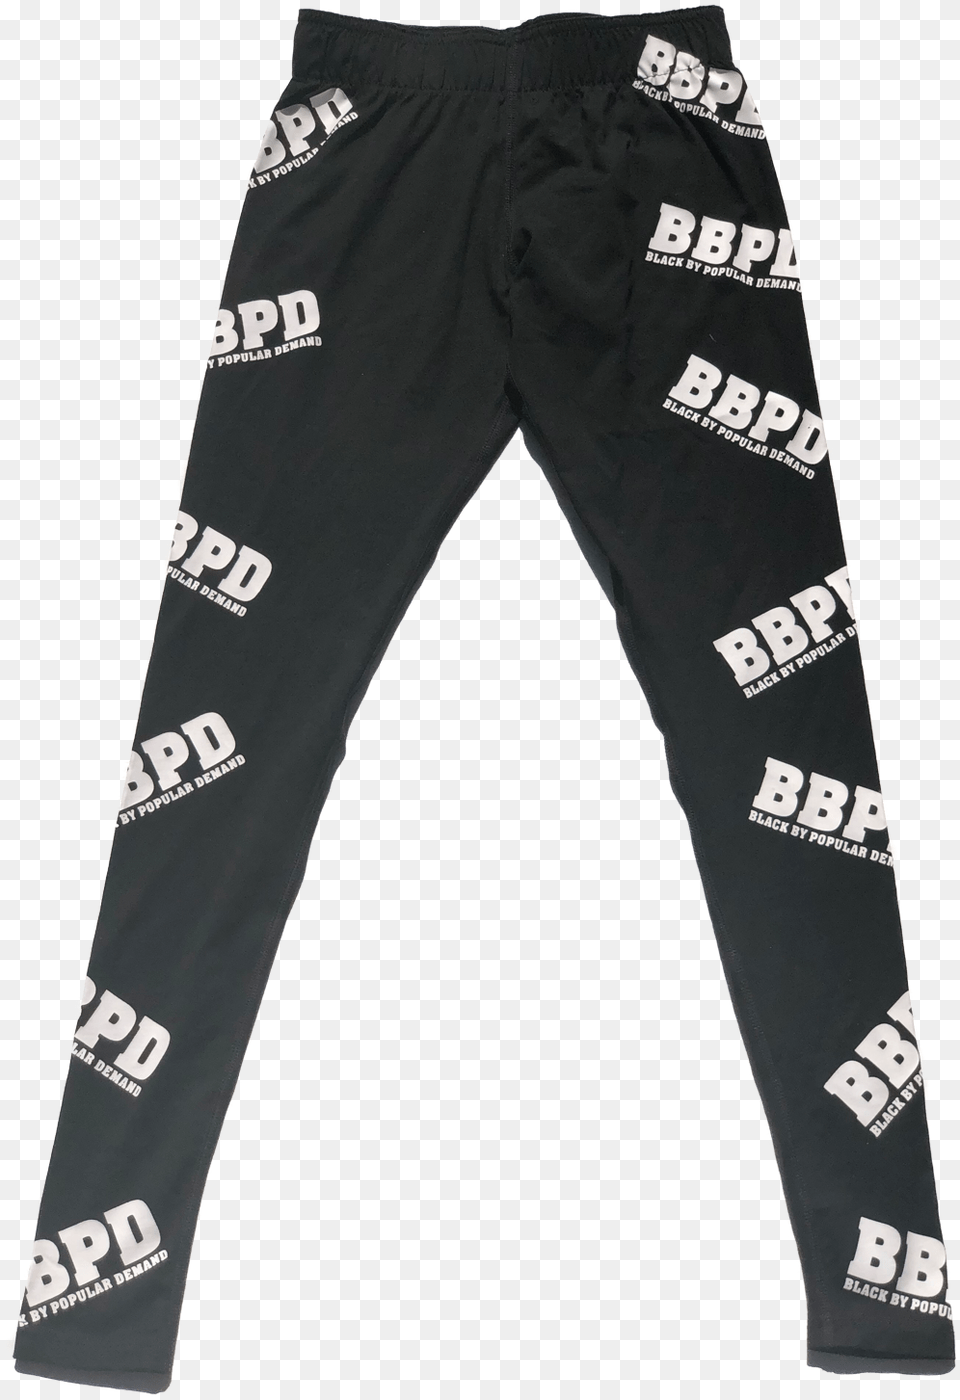 Black By Popular Demand Bbpd Logo Spandex Leggings Pajamas, Clothing, Jeans, Pants Png